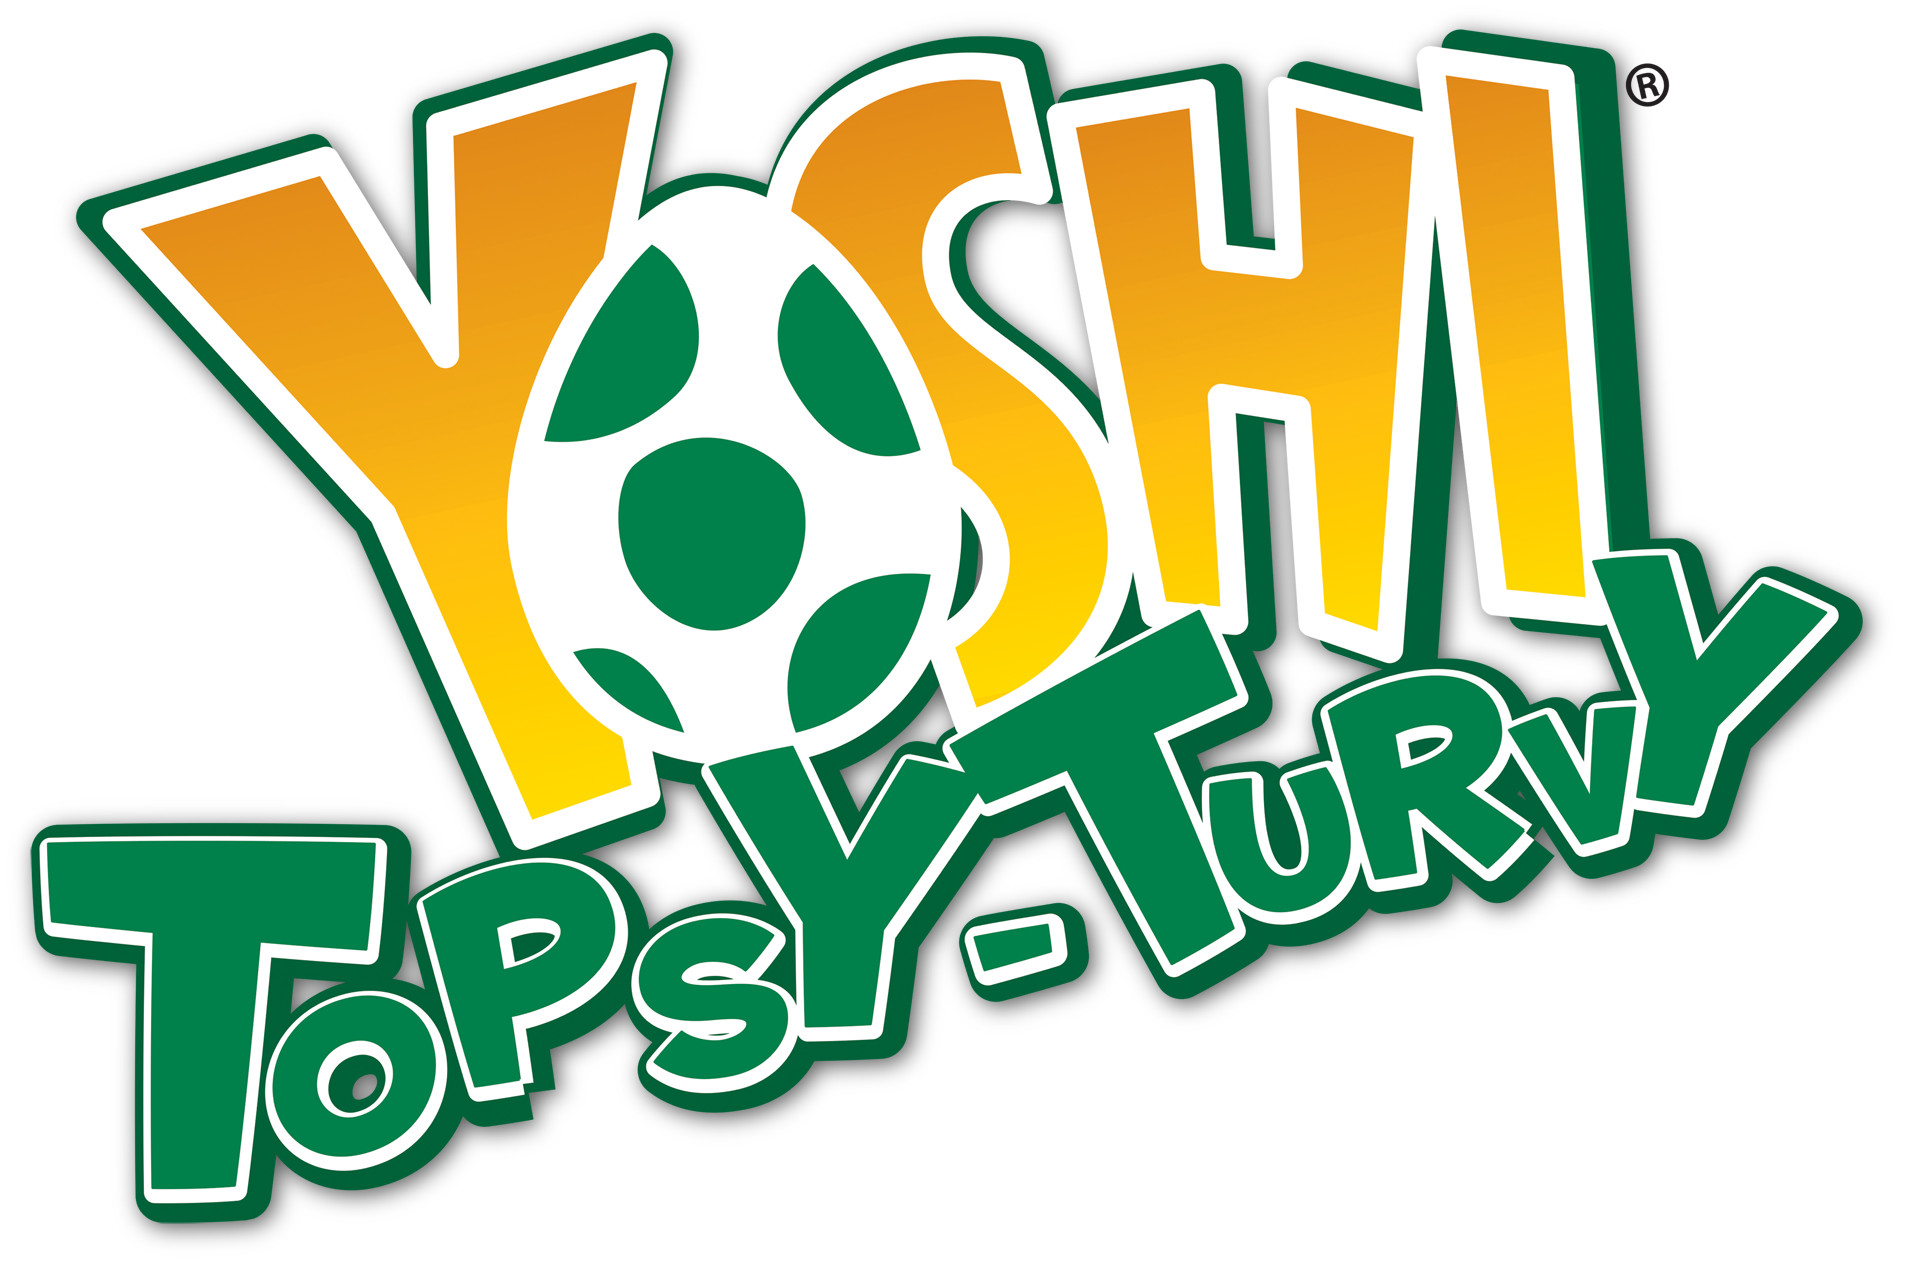 High Quality Yoshi Topsy Turvy Logo Blank Meme Template